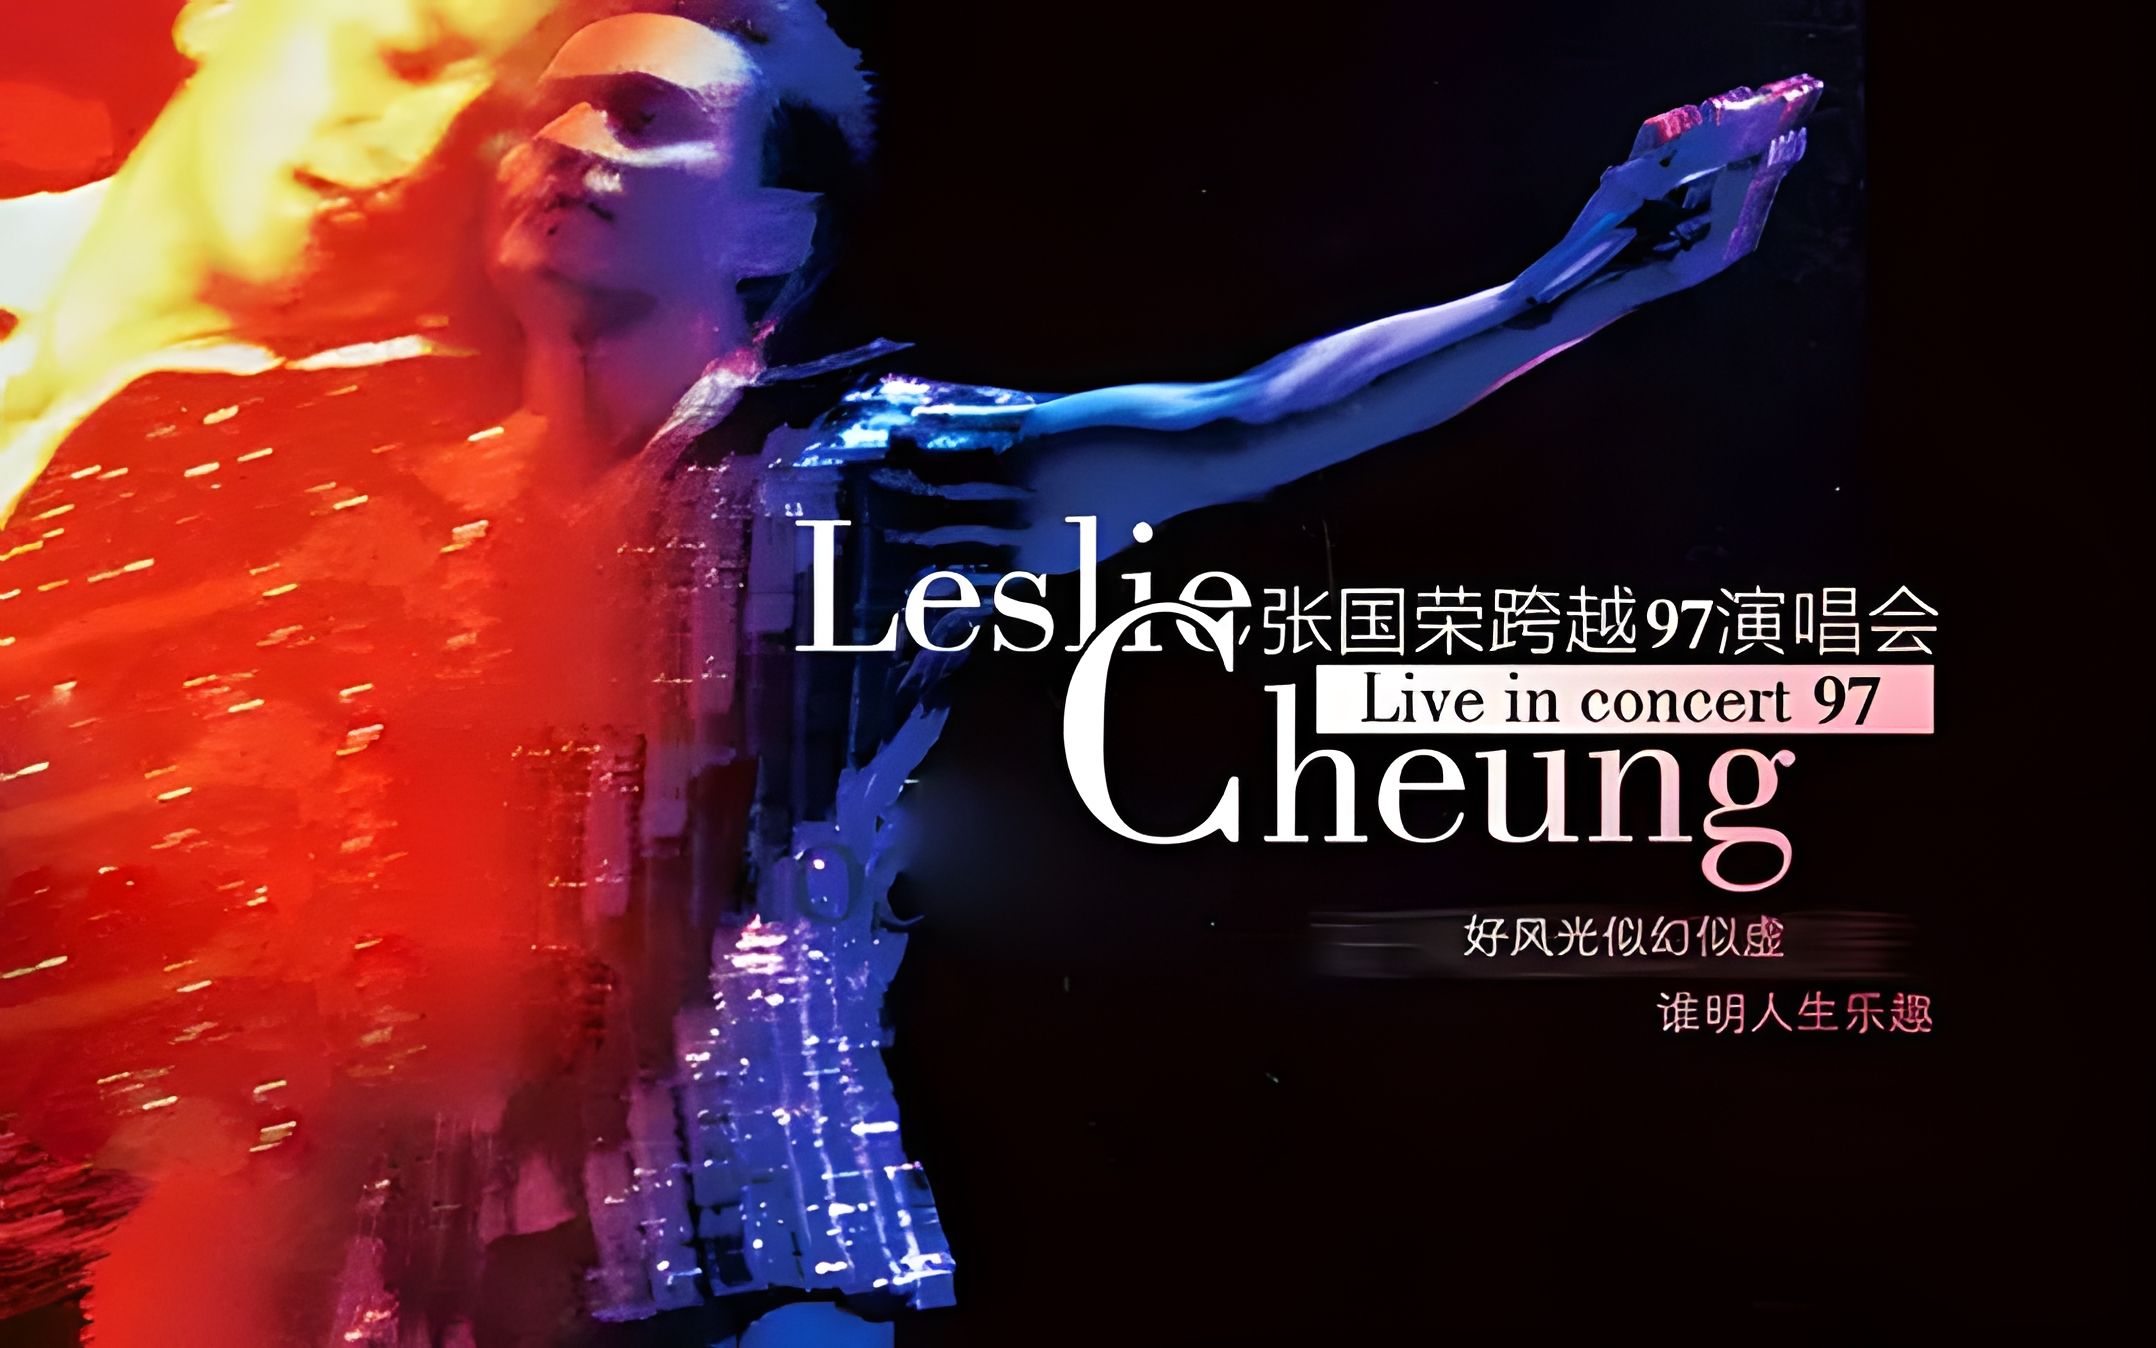 【极致修复】张国荣1996年跨越97演唱会 Leslie Cheung Live in Concert 97